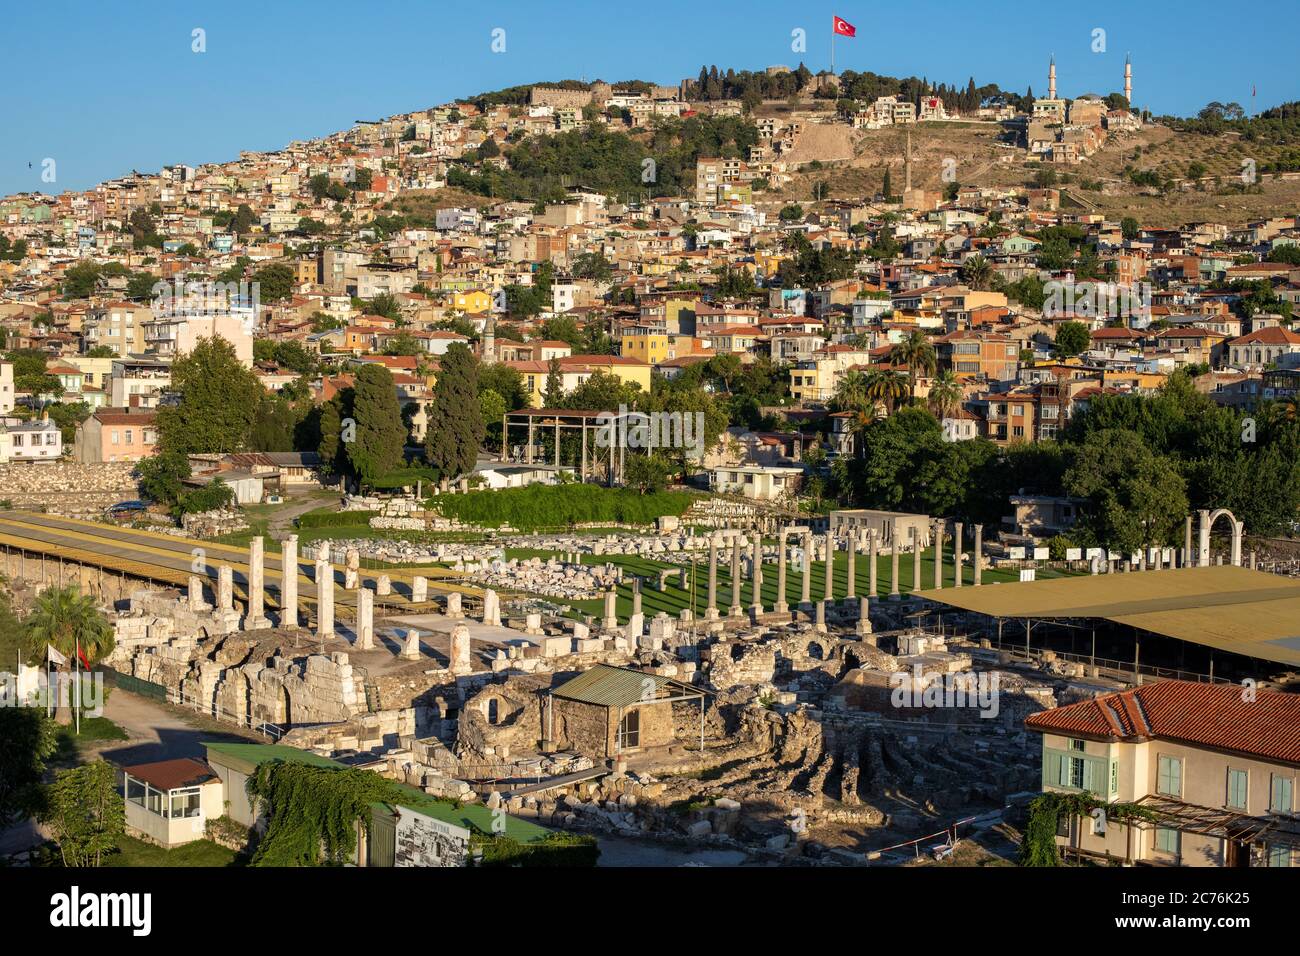 IZMIR, TURKEY,JULY 12 ,2020: The Agora of Smyrna, alternatively known as the Agora of İzmir, is an ancient Roman agora located in Smyrna. Stock Photo